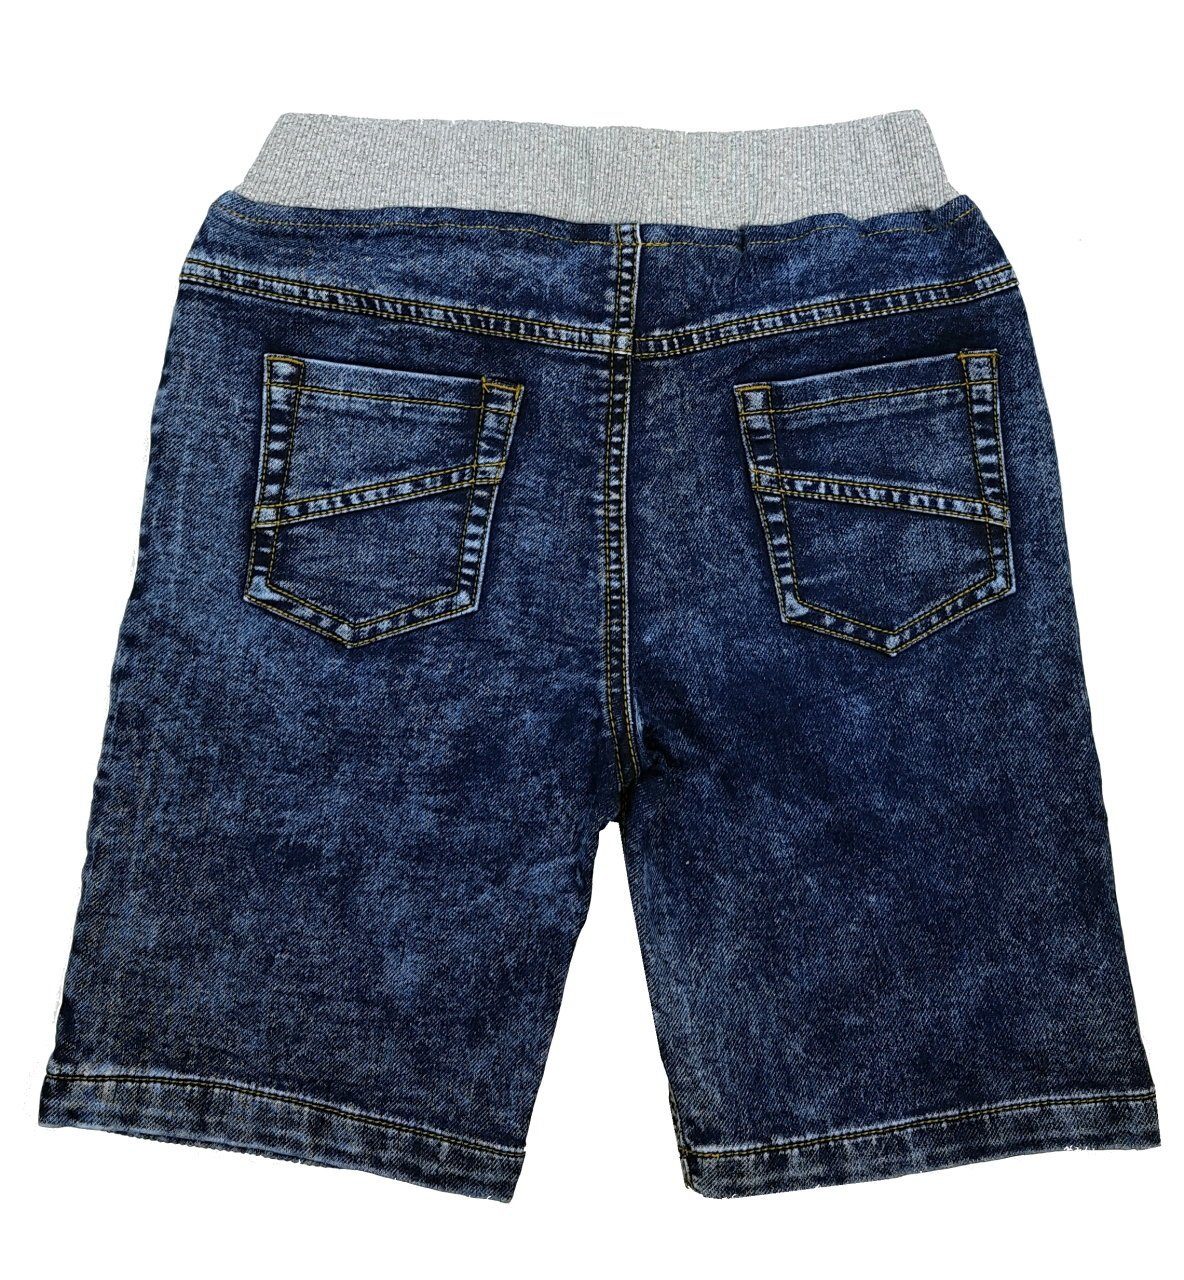 Sommerhose, Boy Jn206 Jeans Stretch Bermuda Hose, Jogg-Jeansbermudas Fashion